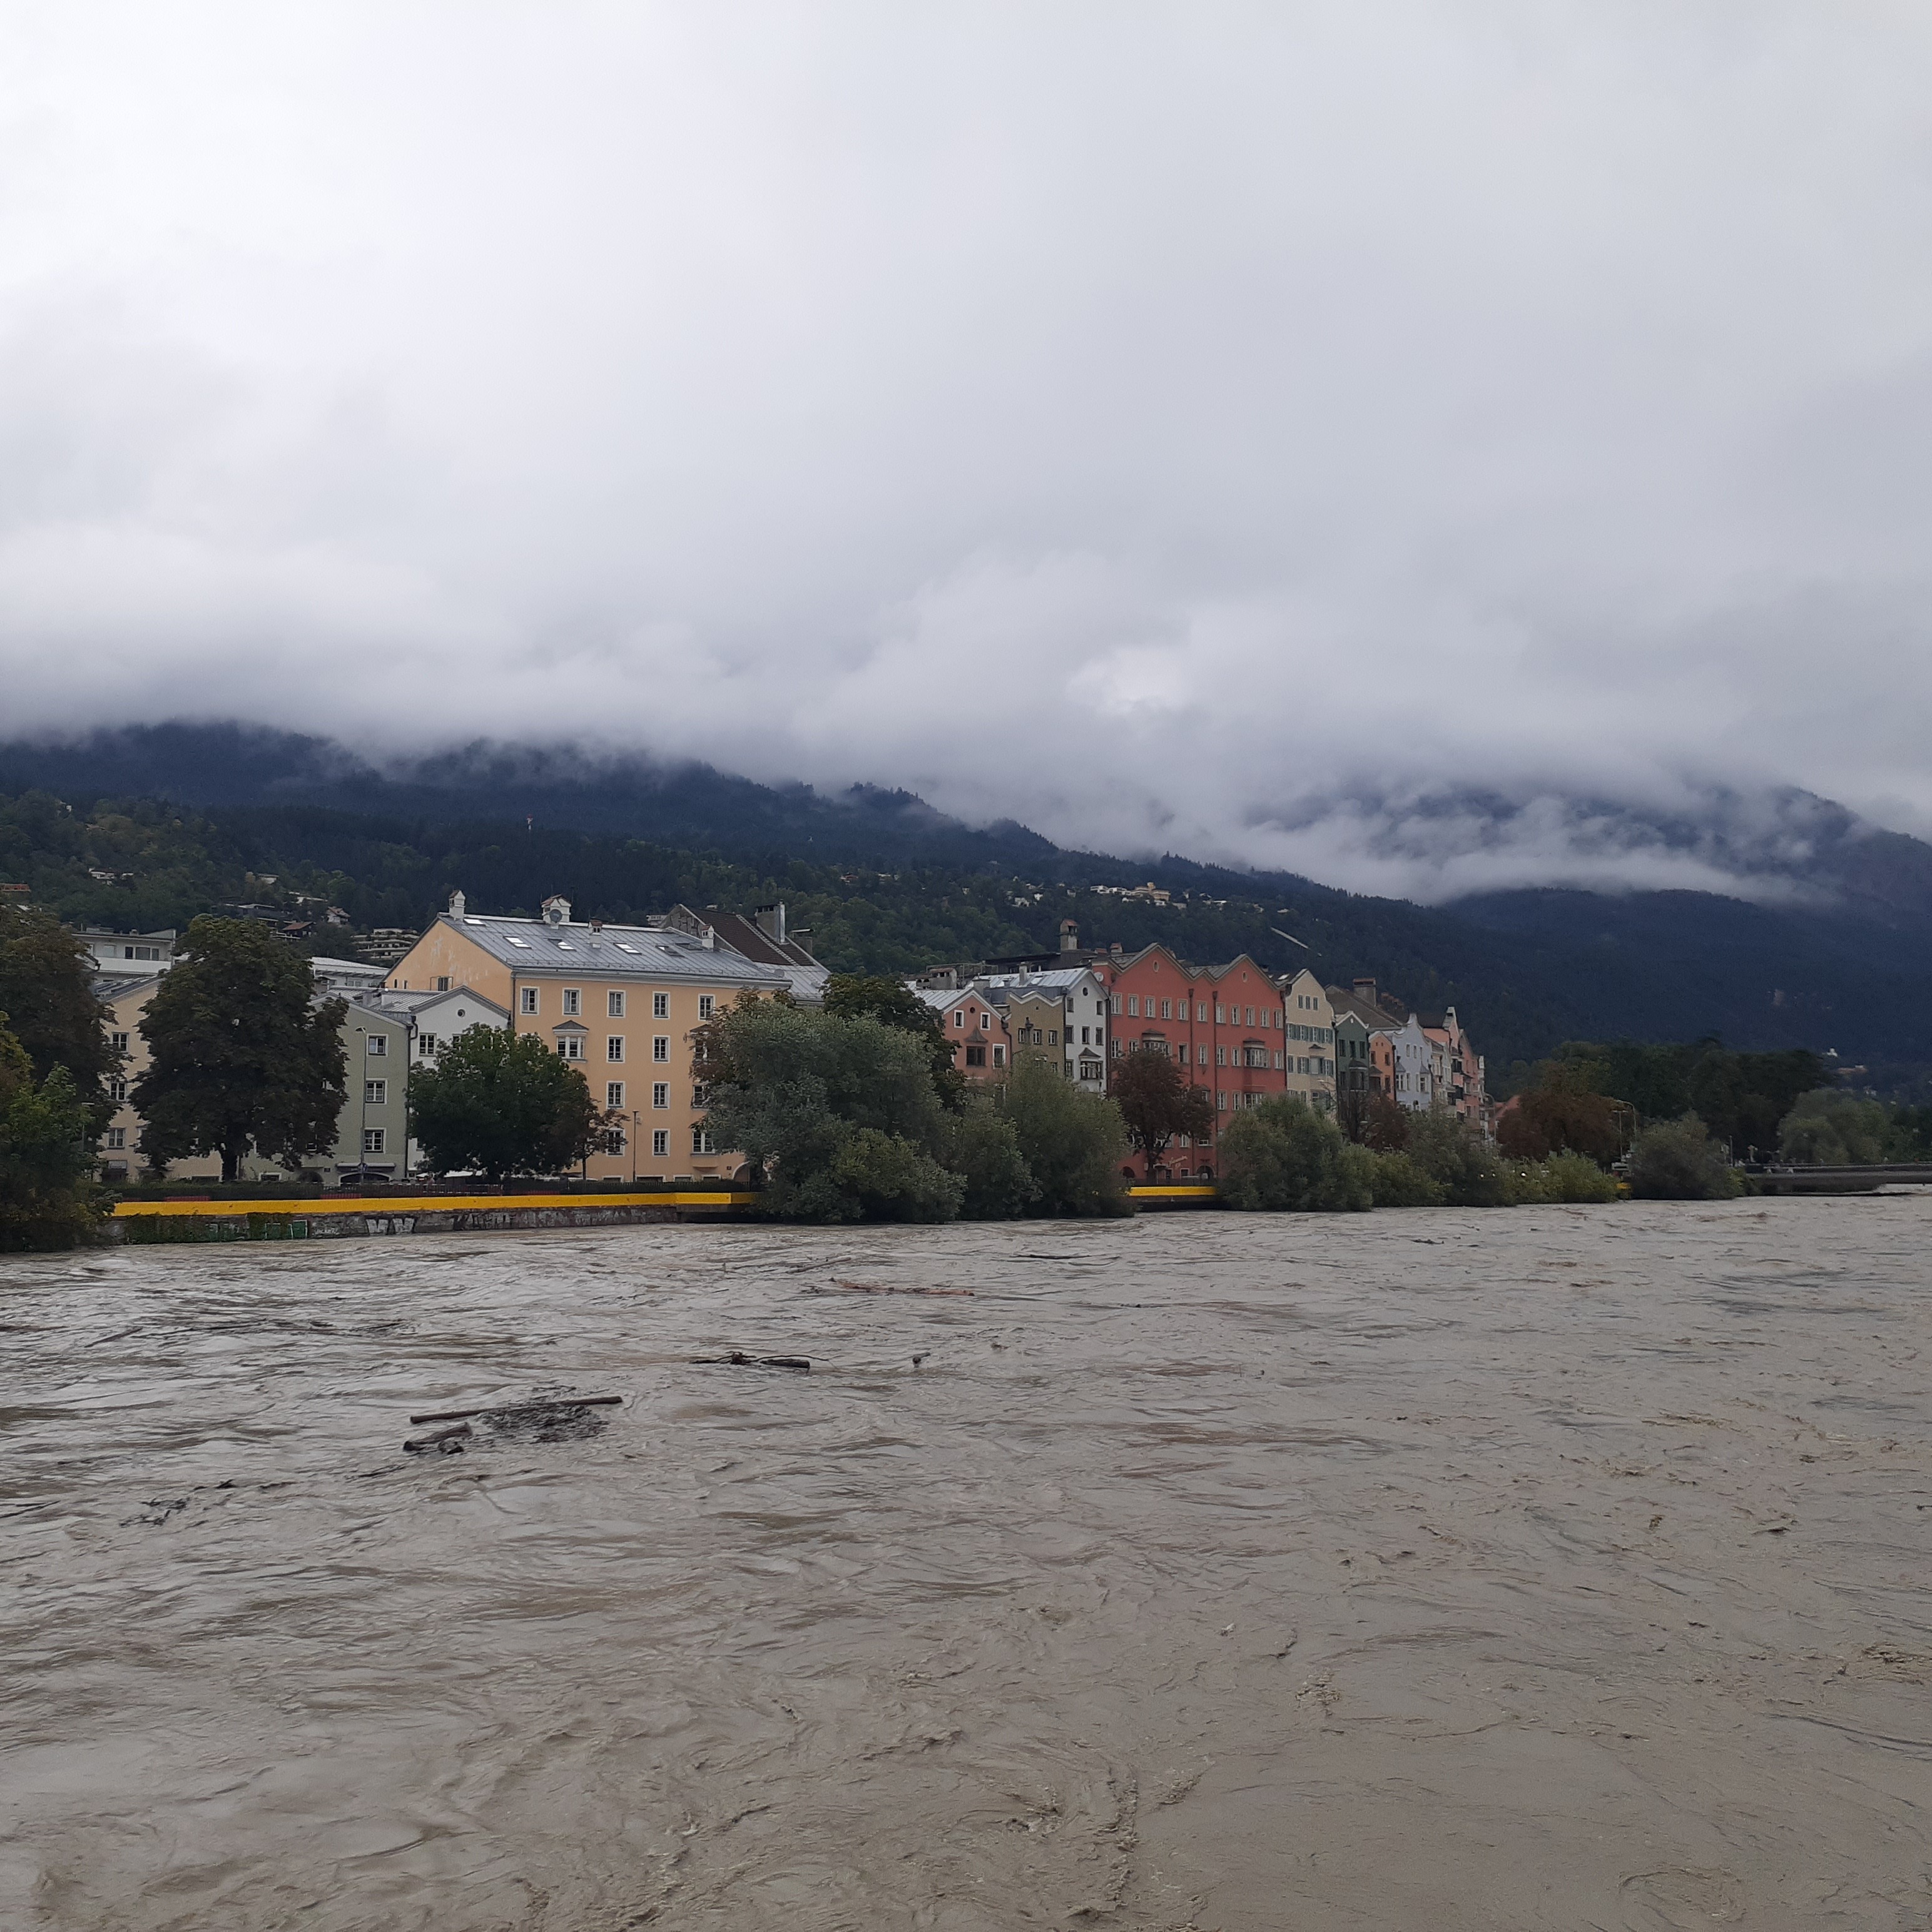 High water in Innsbruck